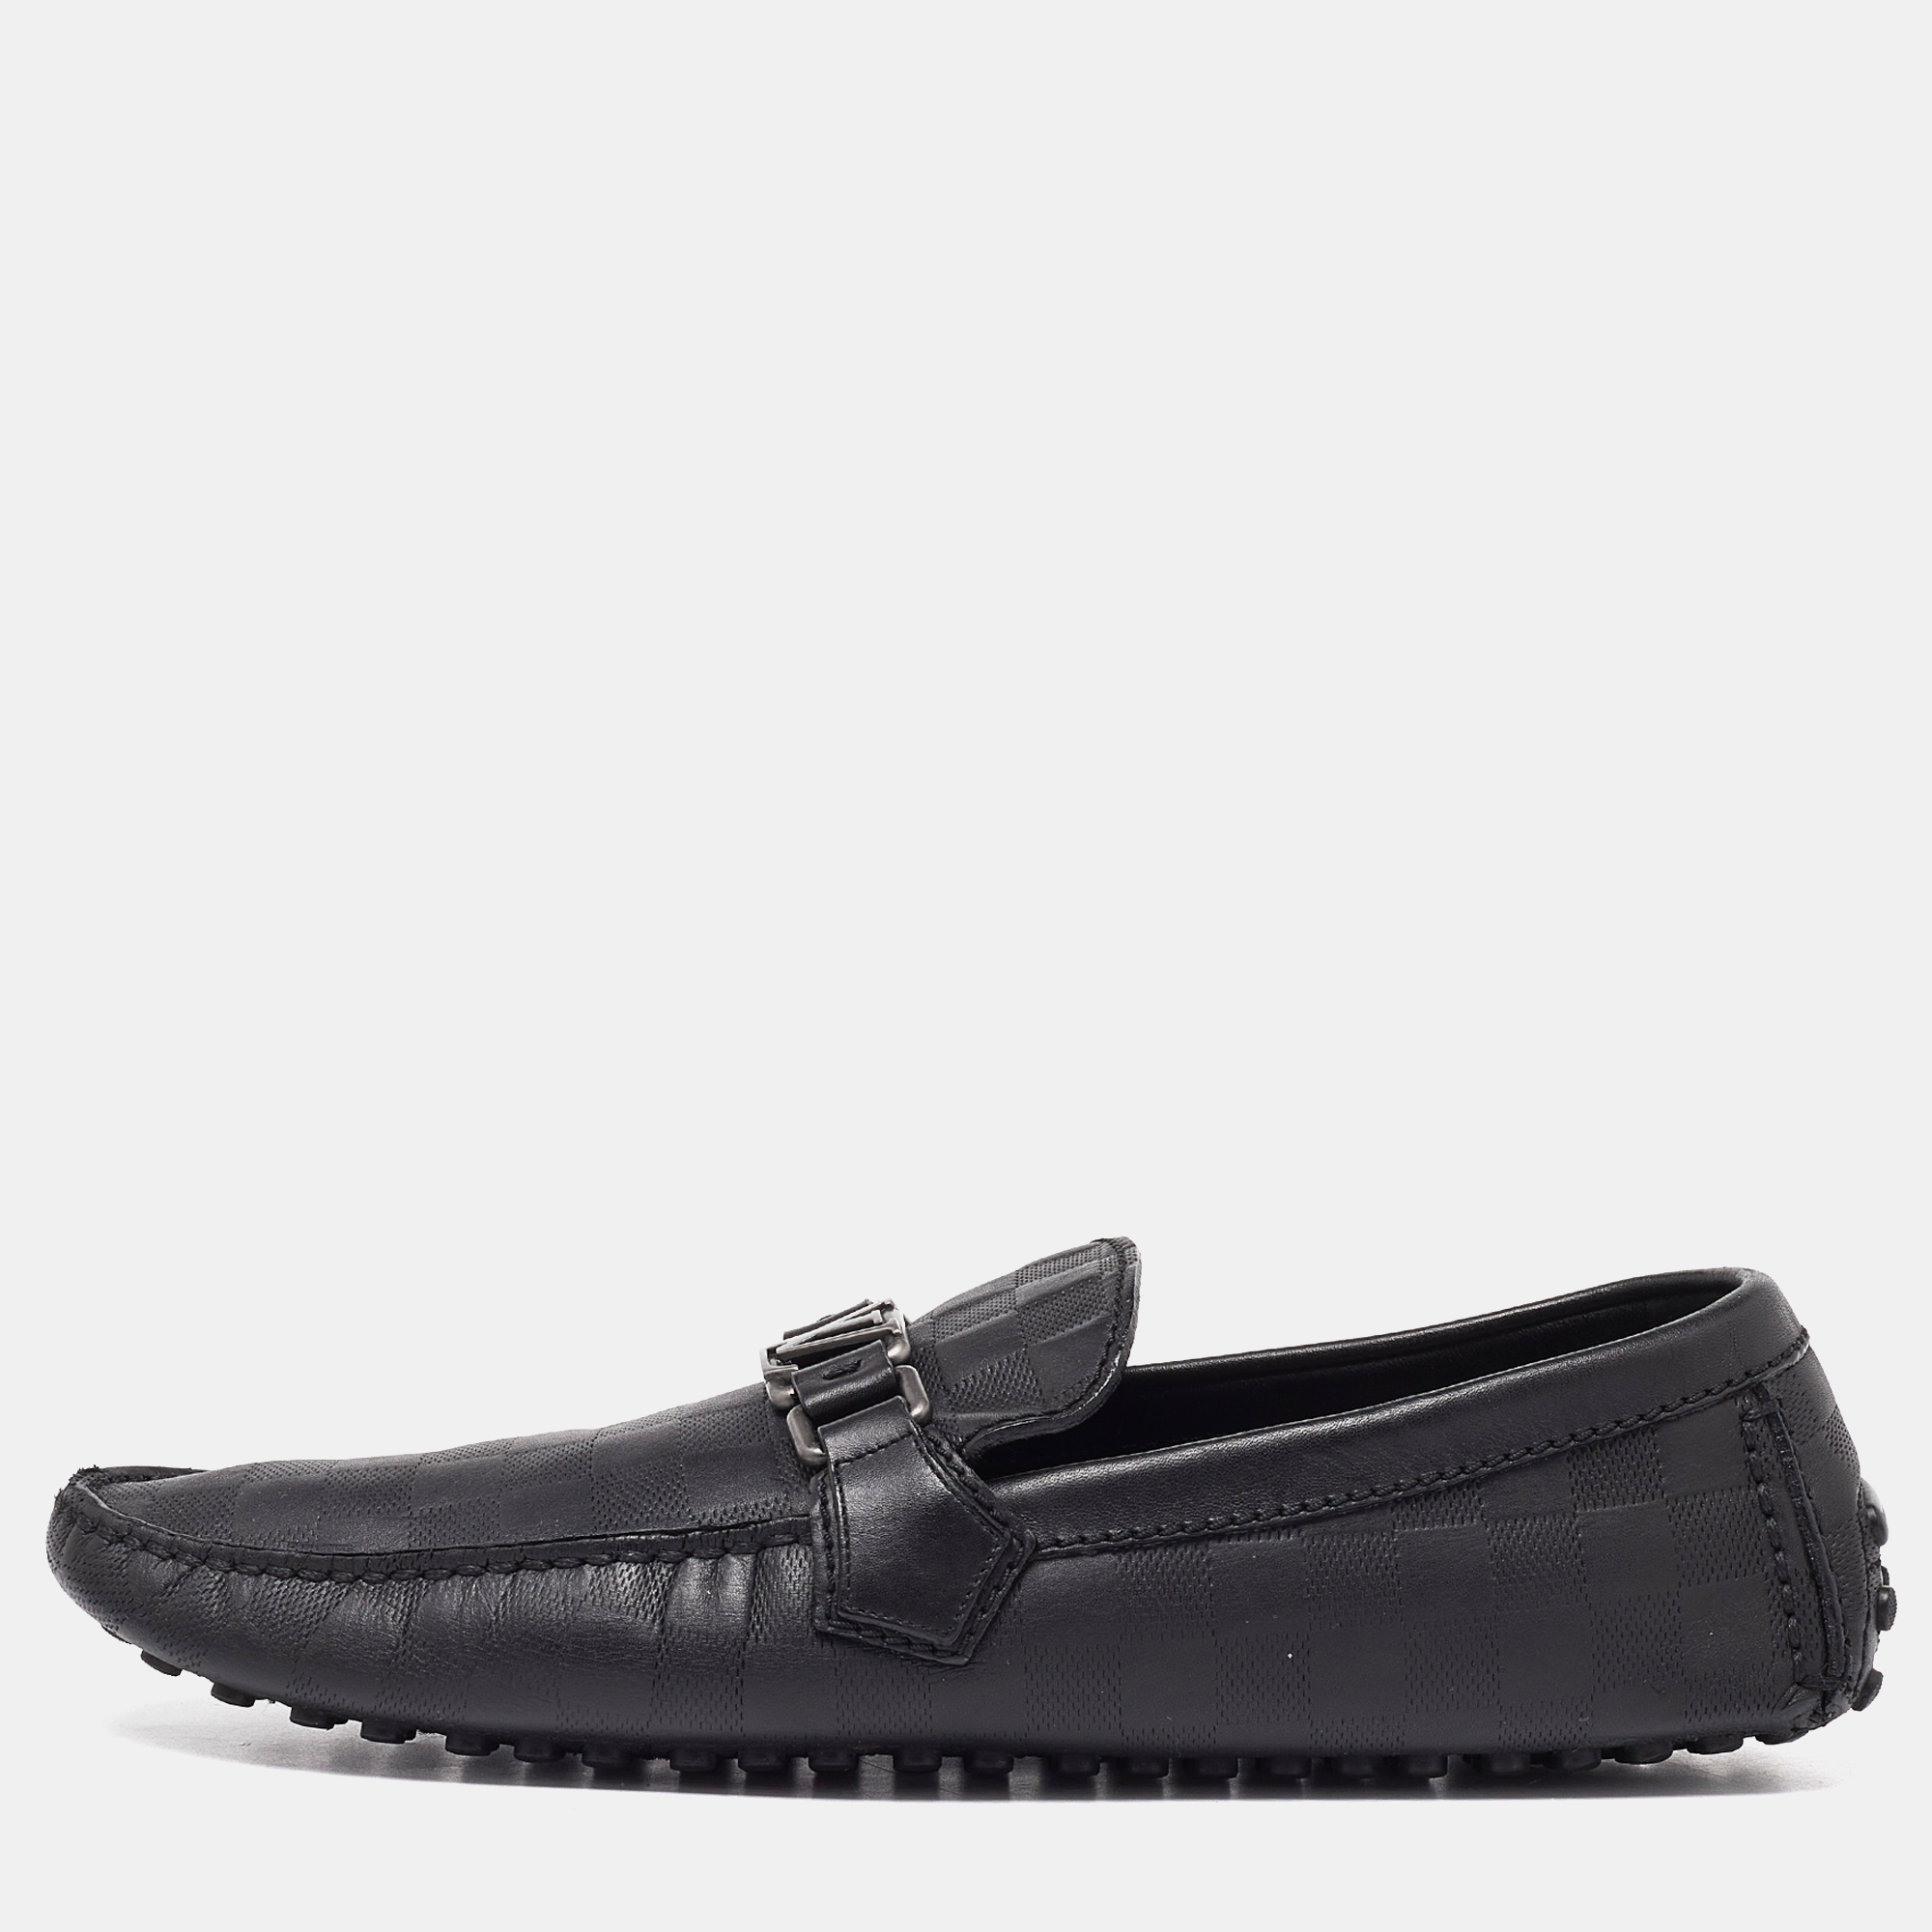 Louis vuitton black damier leather hockenheim slip on loafers size 43